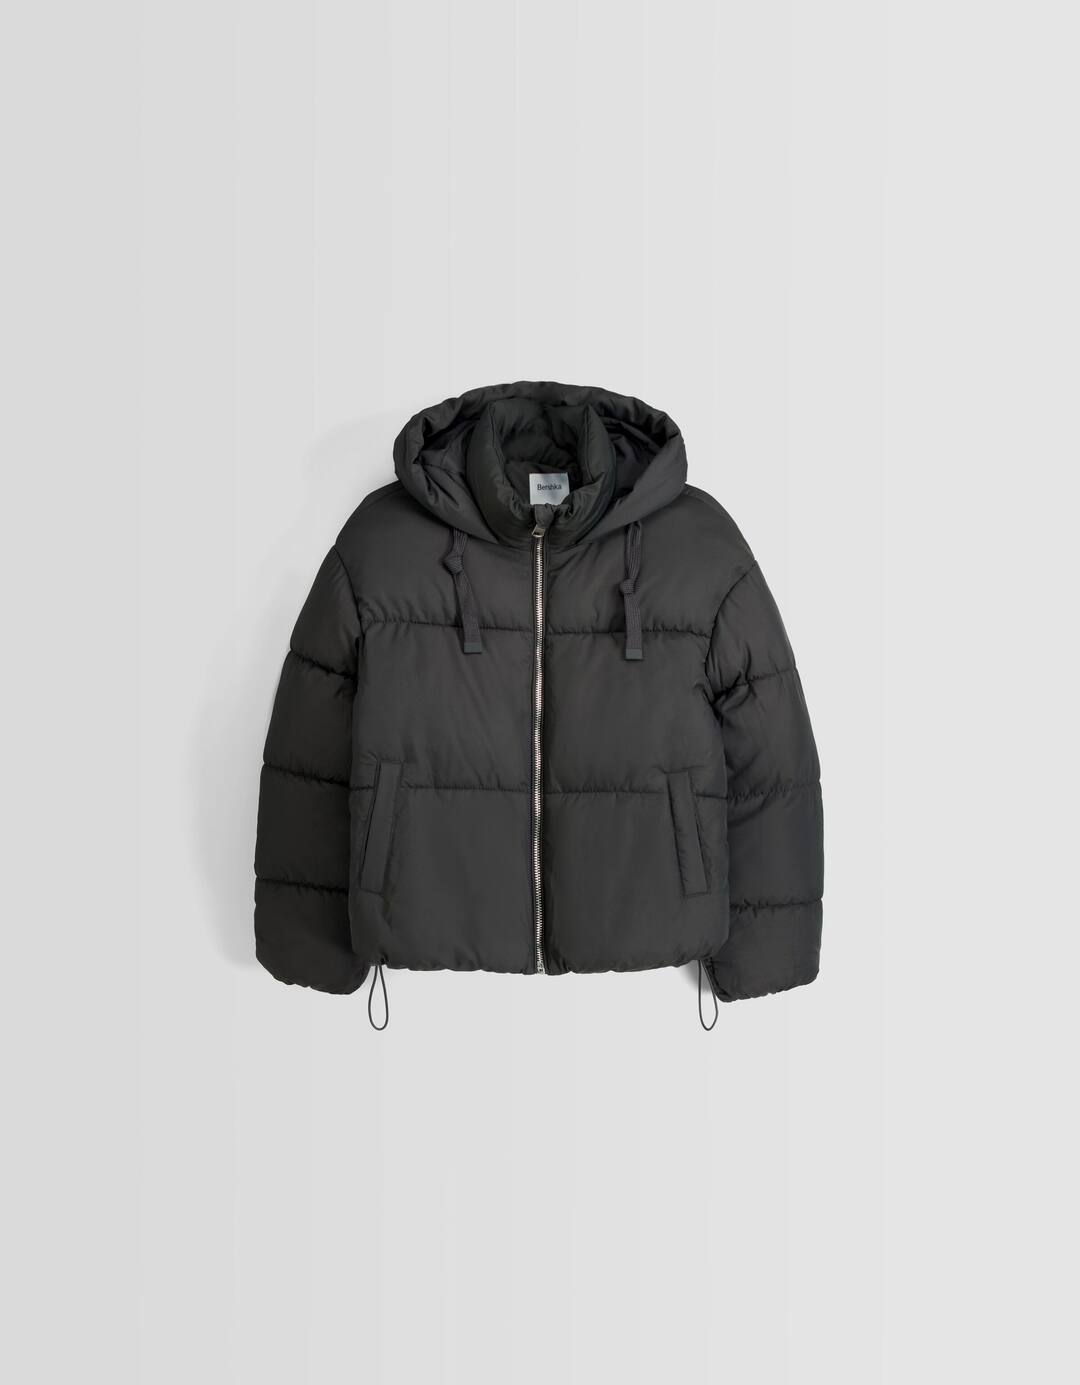 Oversize puffer jacket with hood